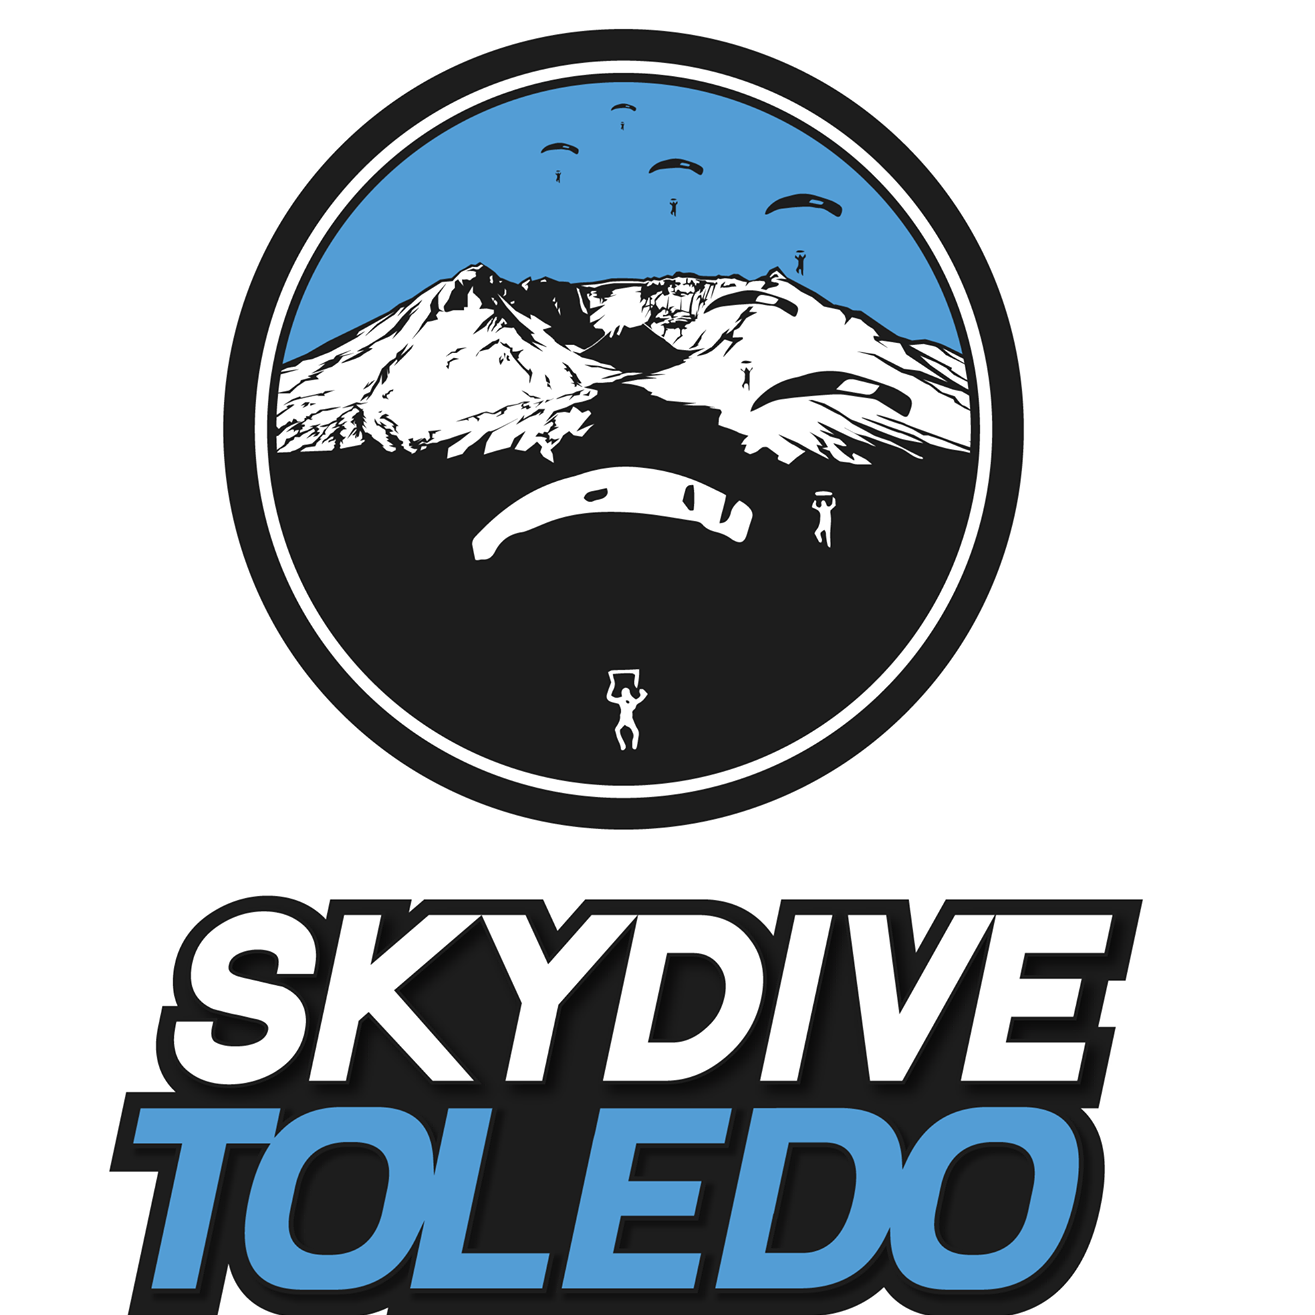 Skydive Toledo logo